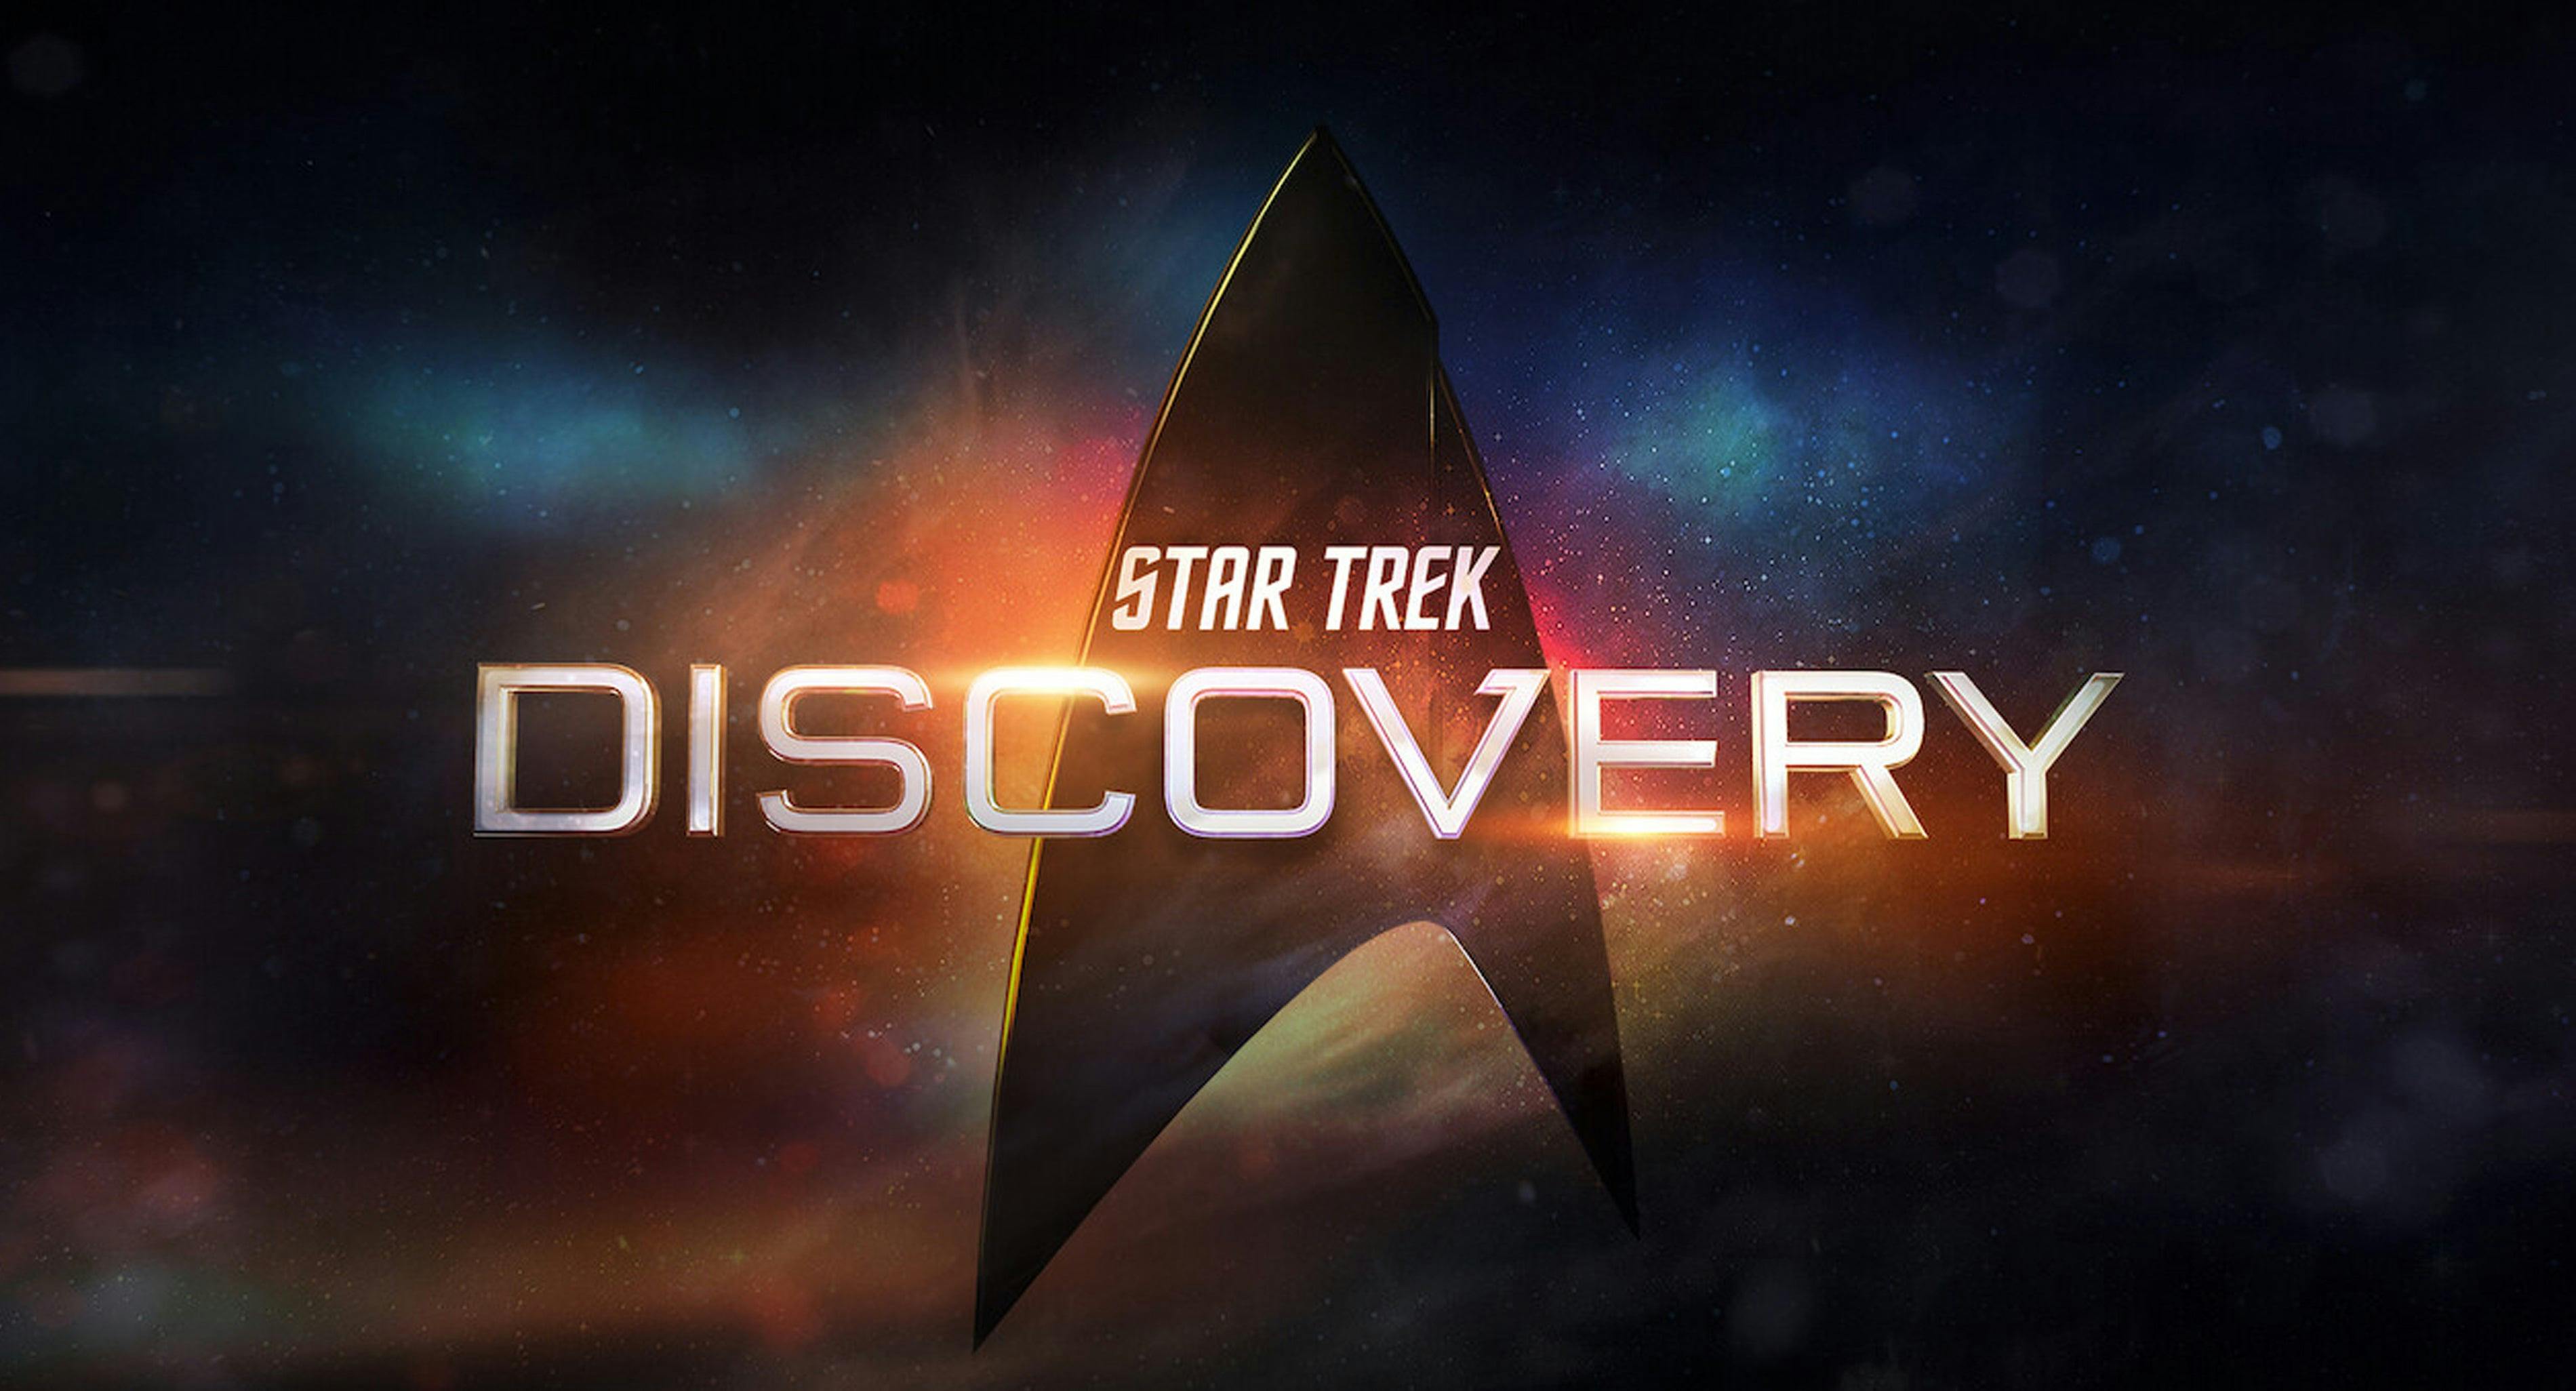 Star Trek: Discovery series logo